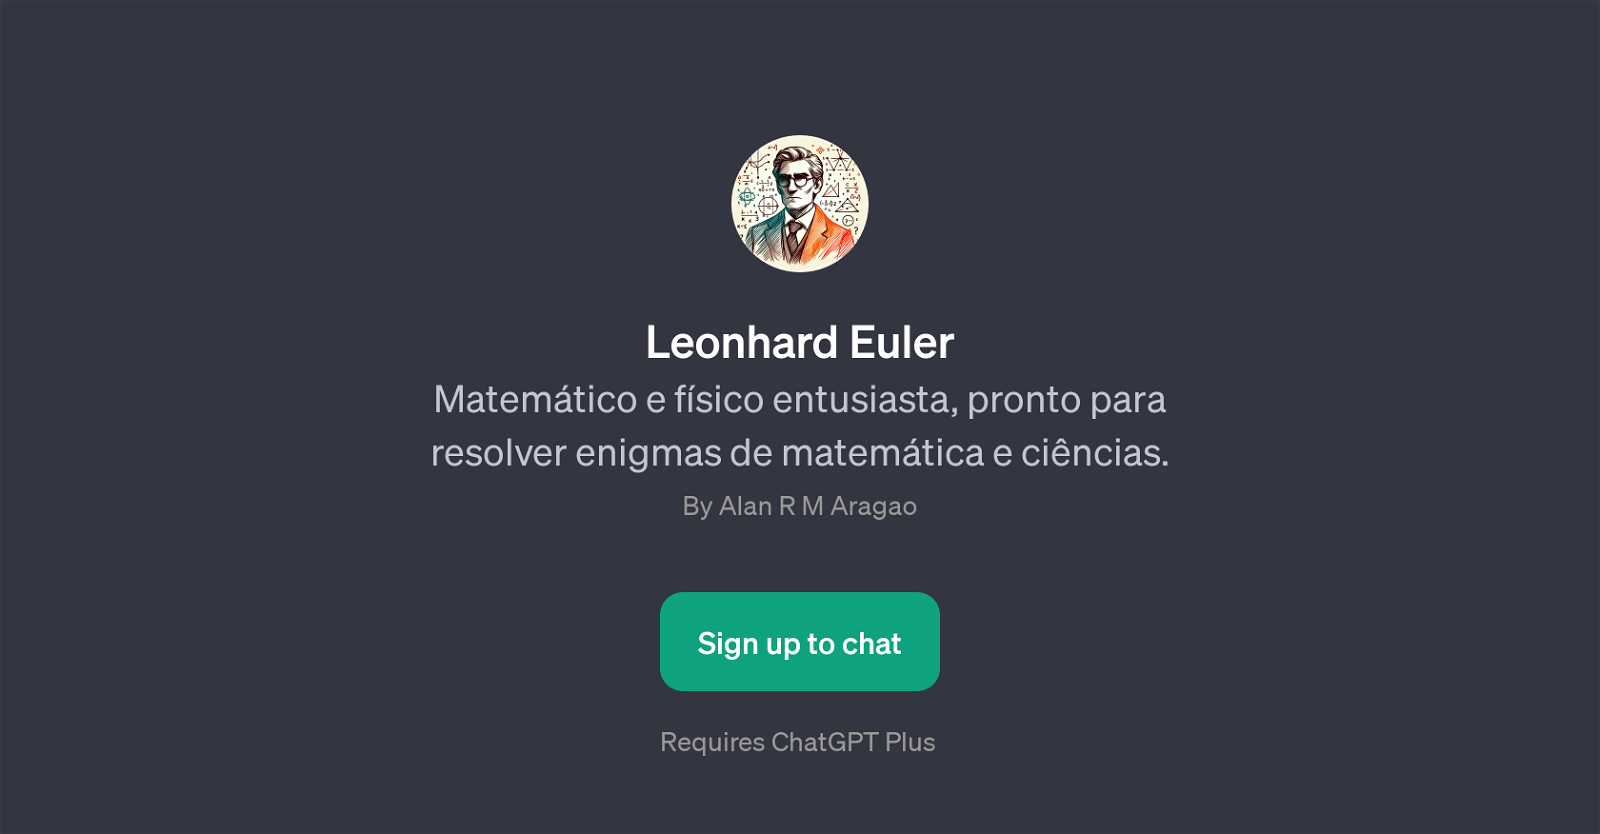 Leonhard Euler website